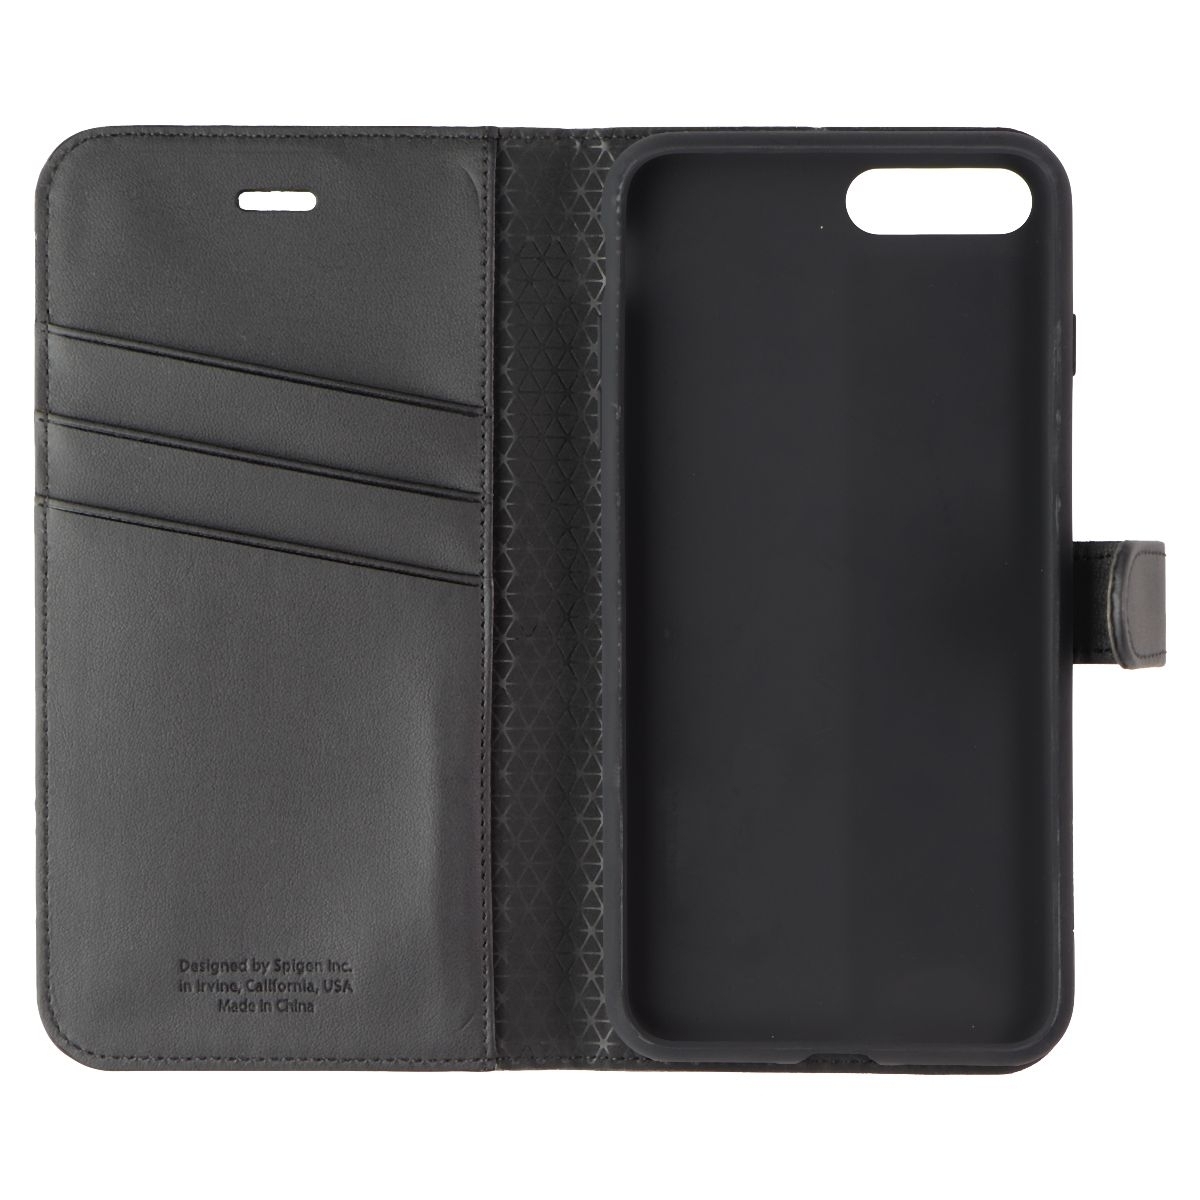 Spigen Wallet S Kickstand Cover For Apple IPhone 8 Plus/7 Plus - Black (Refurbished)